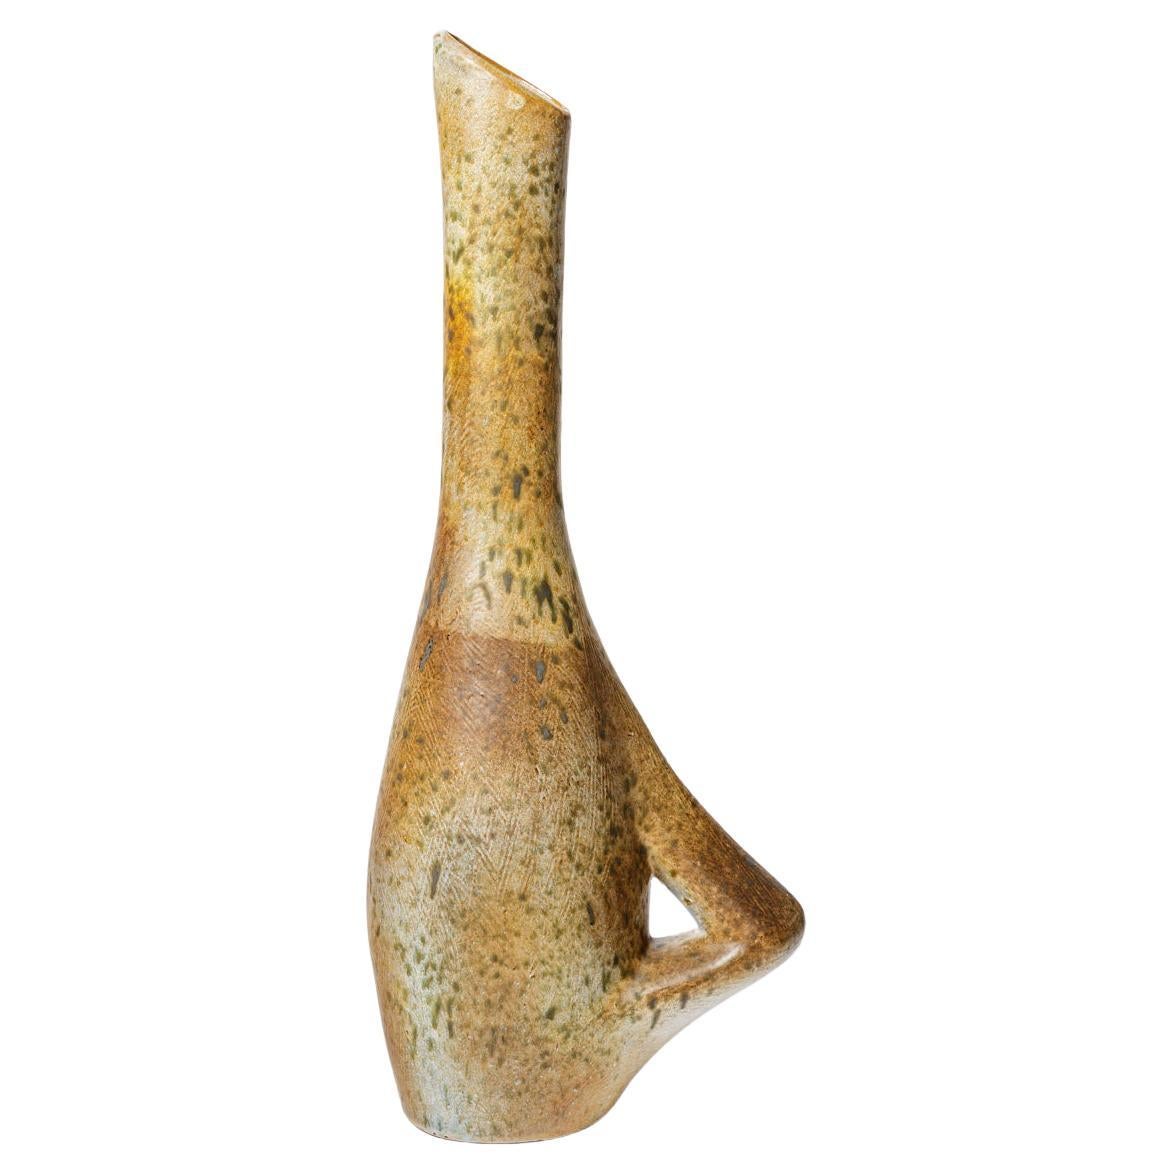 Large 20th century ceramic vase or pitcher by Agnes Escala vallauris 60 cm